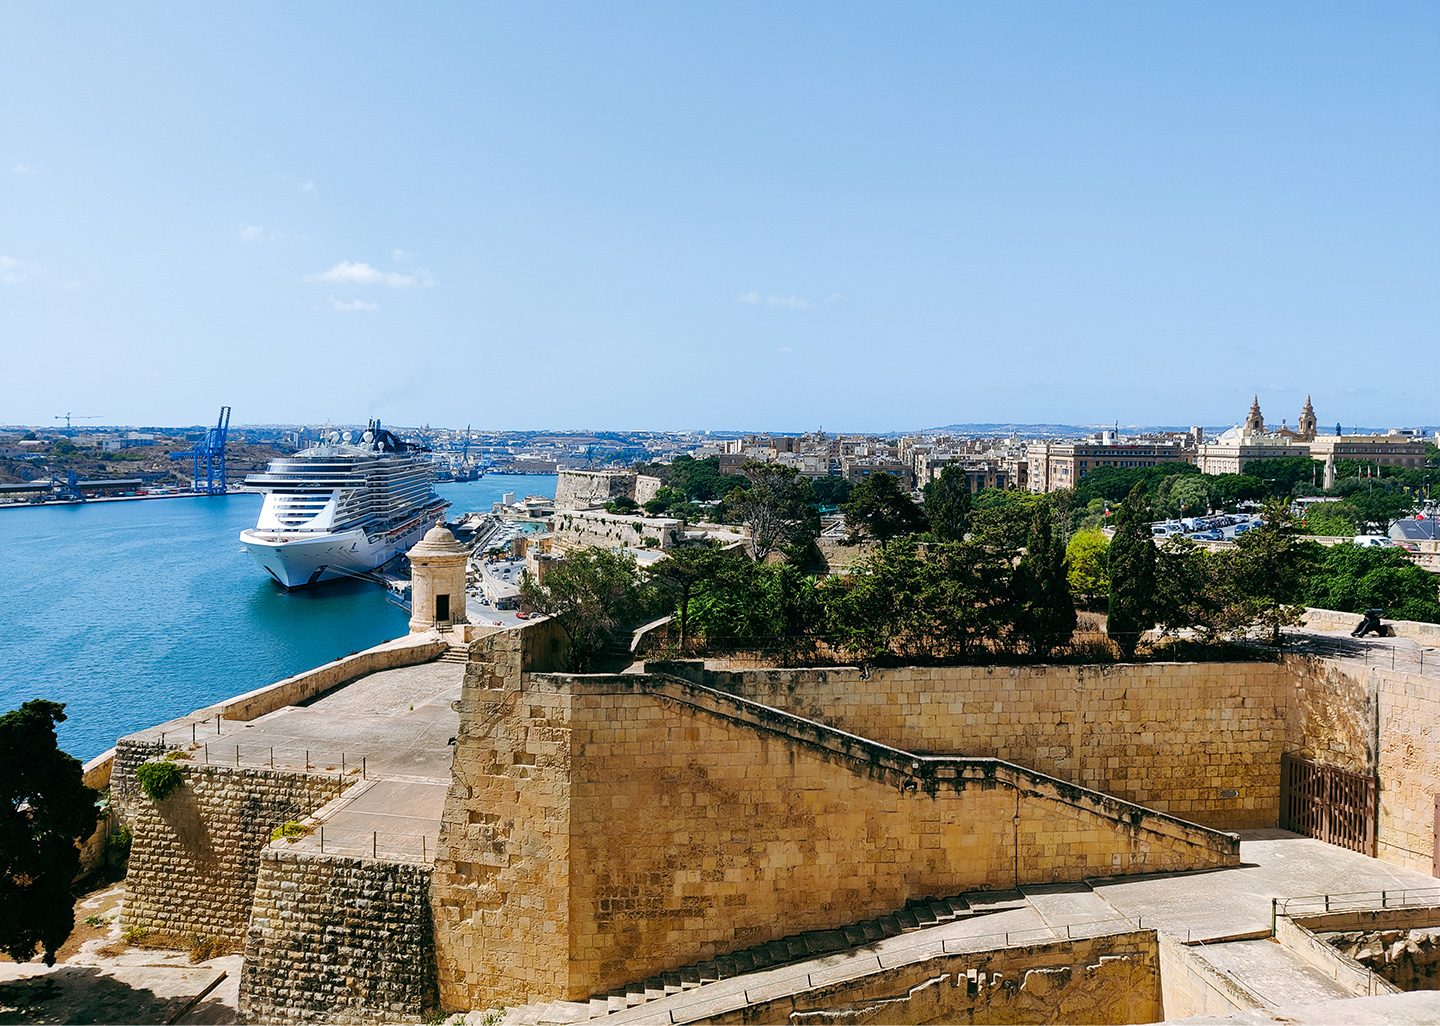 Valletta Cruise Port awarded as Best Port of Call Global